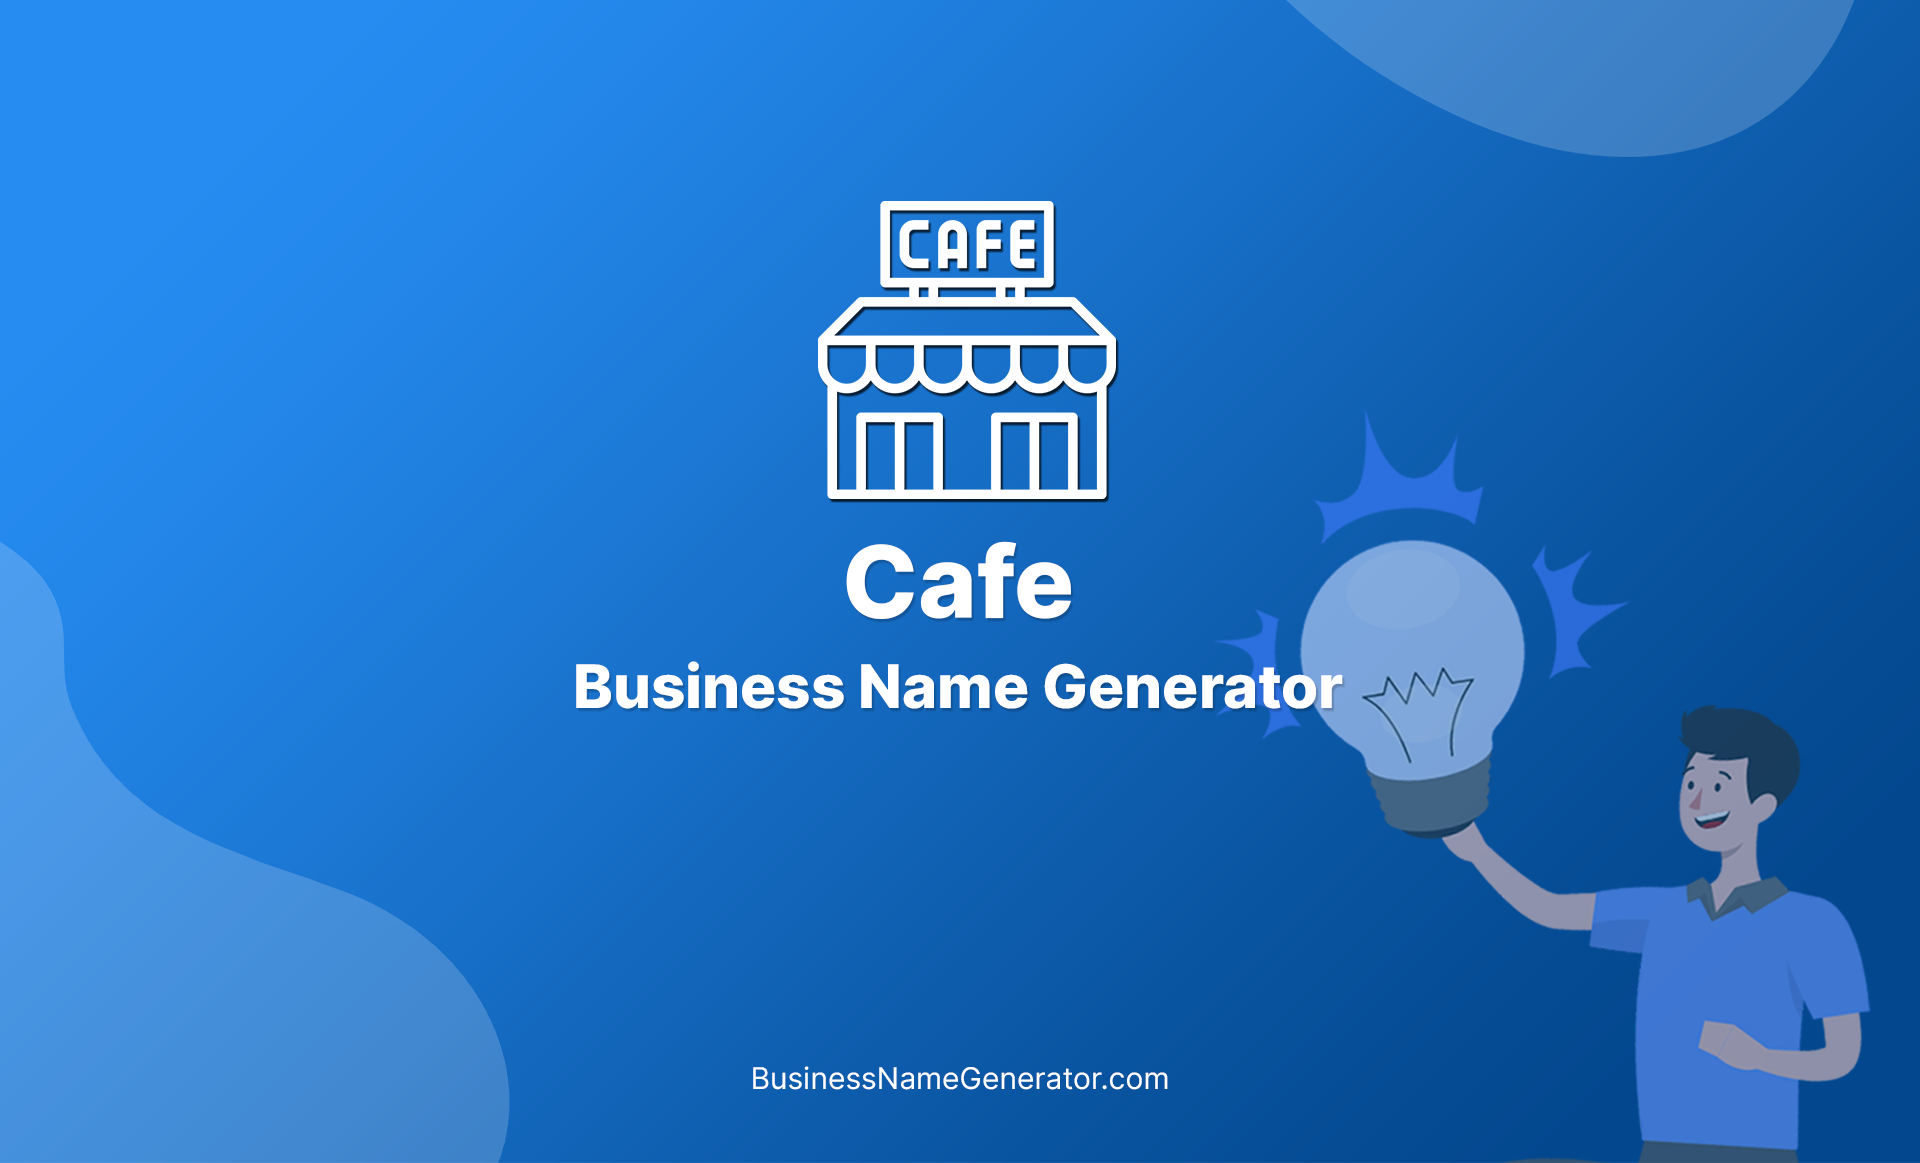 Cafe Business Name Generator